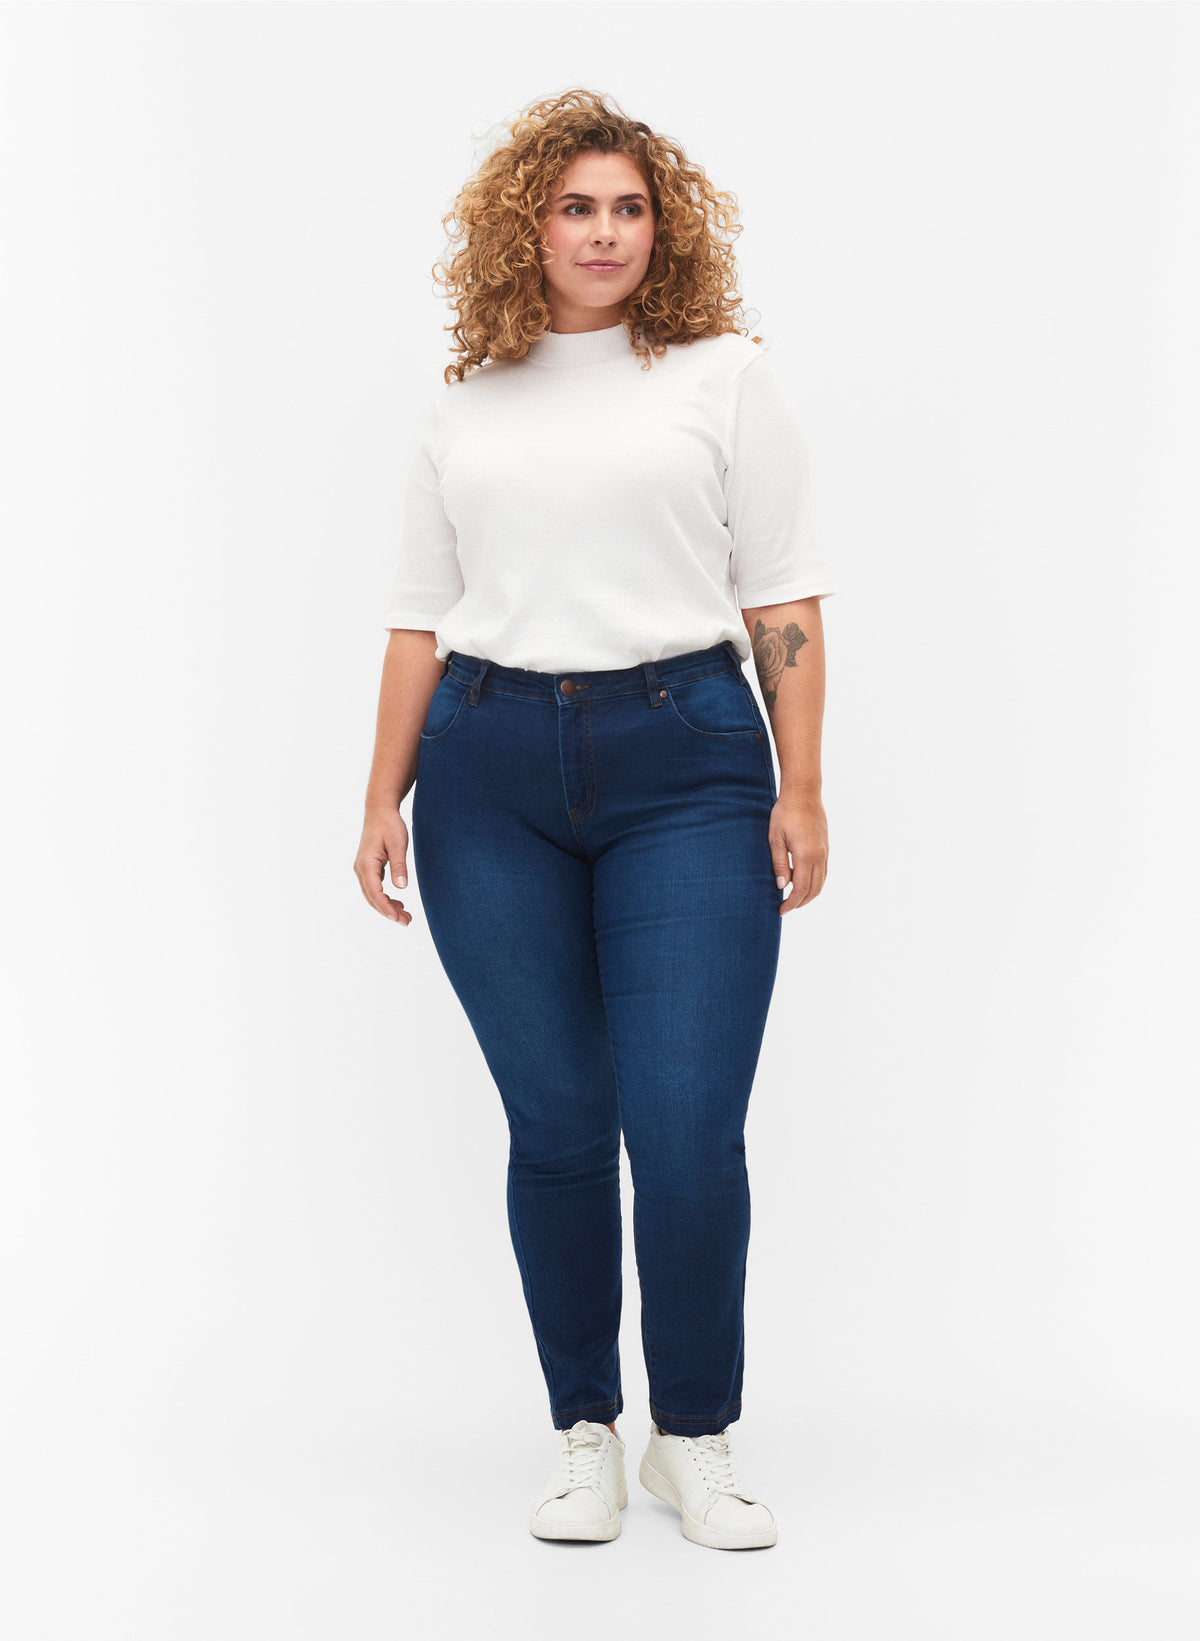 Women's Plus Size Jeans | WardrobePlus Ireland